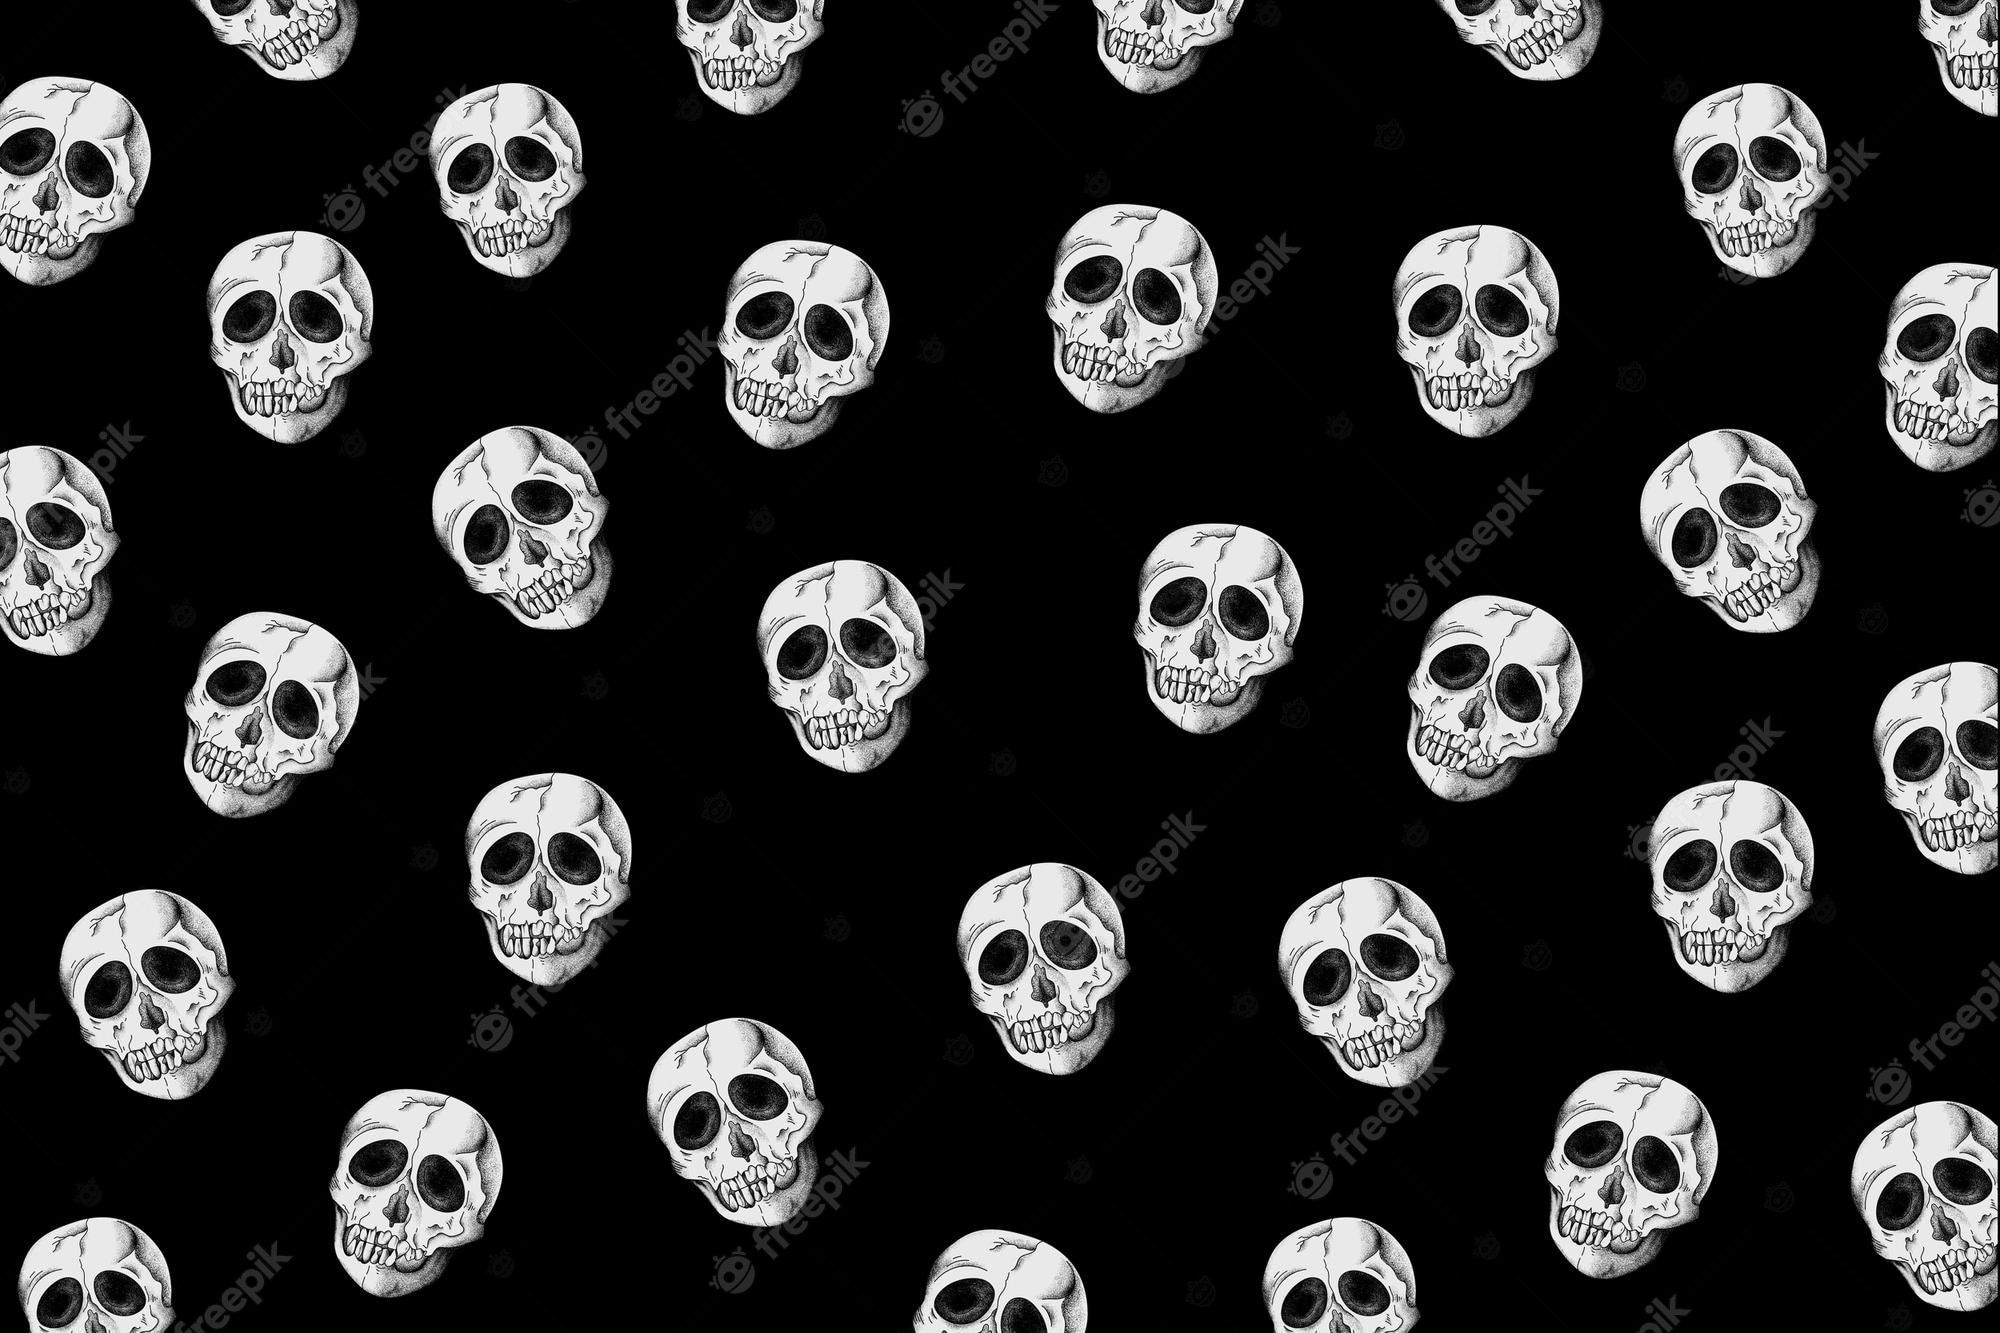  Totenkopf Hintergrundbild 2000x1333. Wallpaper Skull Bilder Download auf Freepik